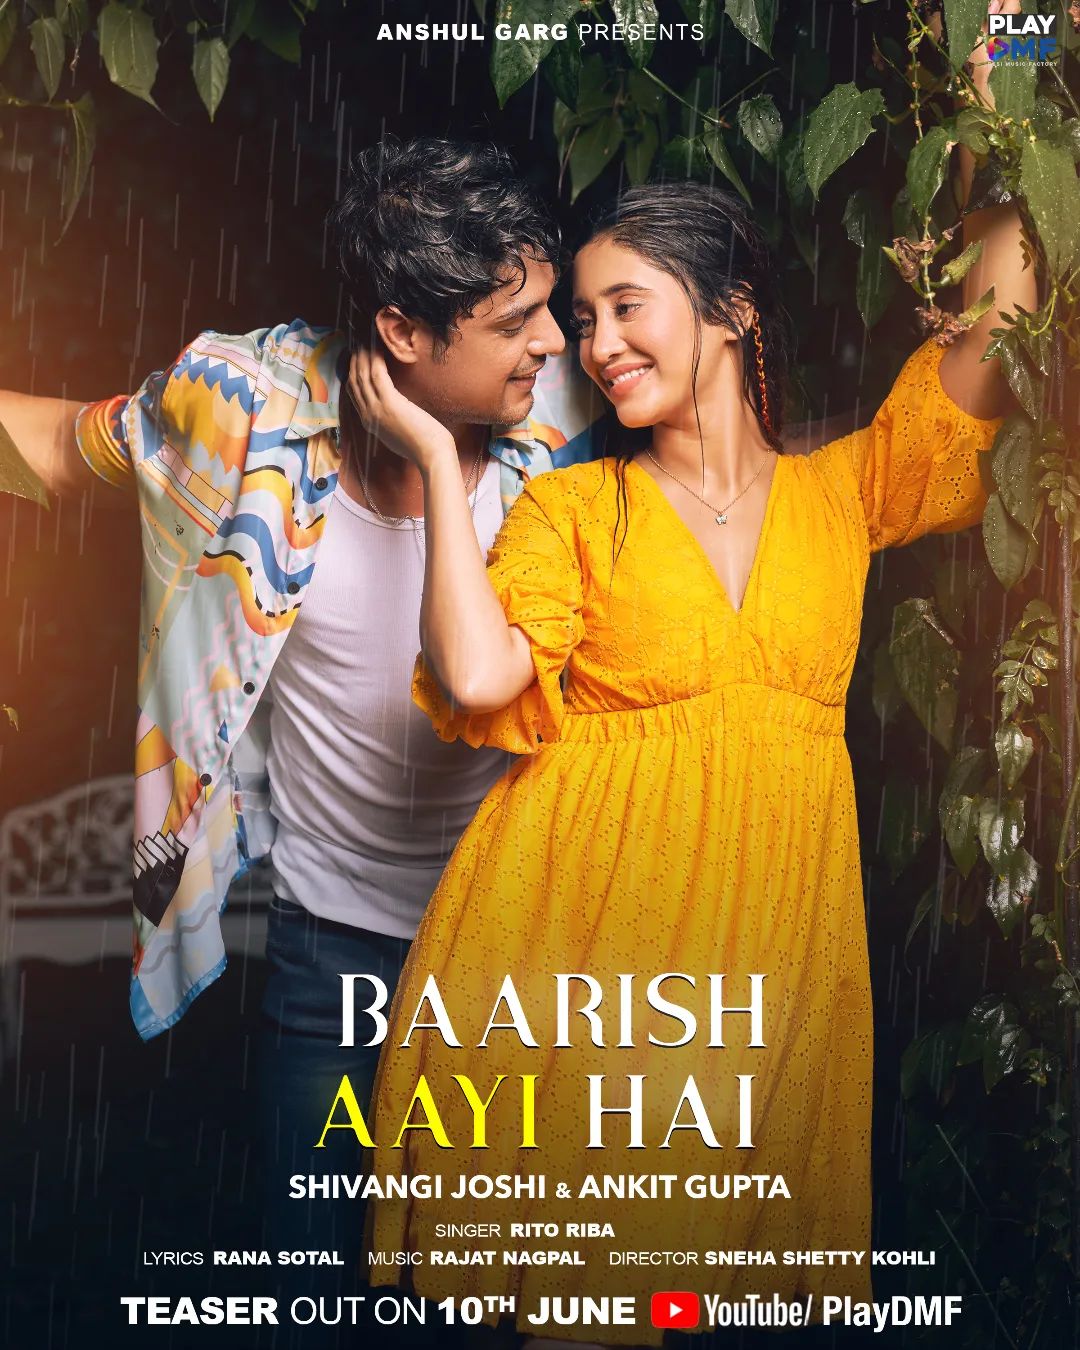 Barish Aayi hai: Shivangi Joshi and Ankit Gupta's new album Song teaser launched 16877